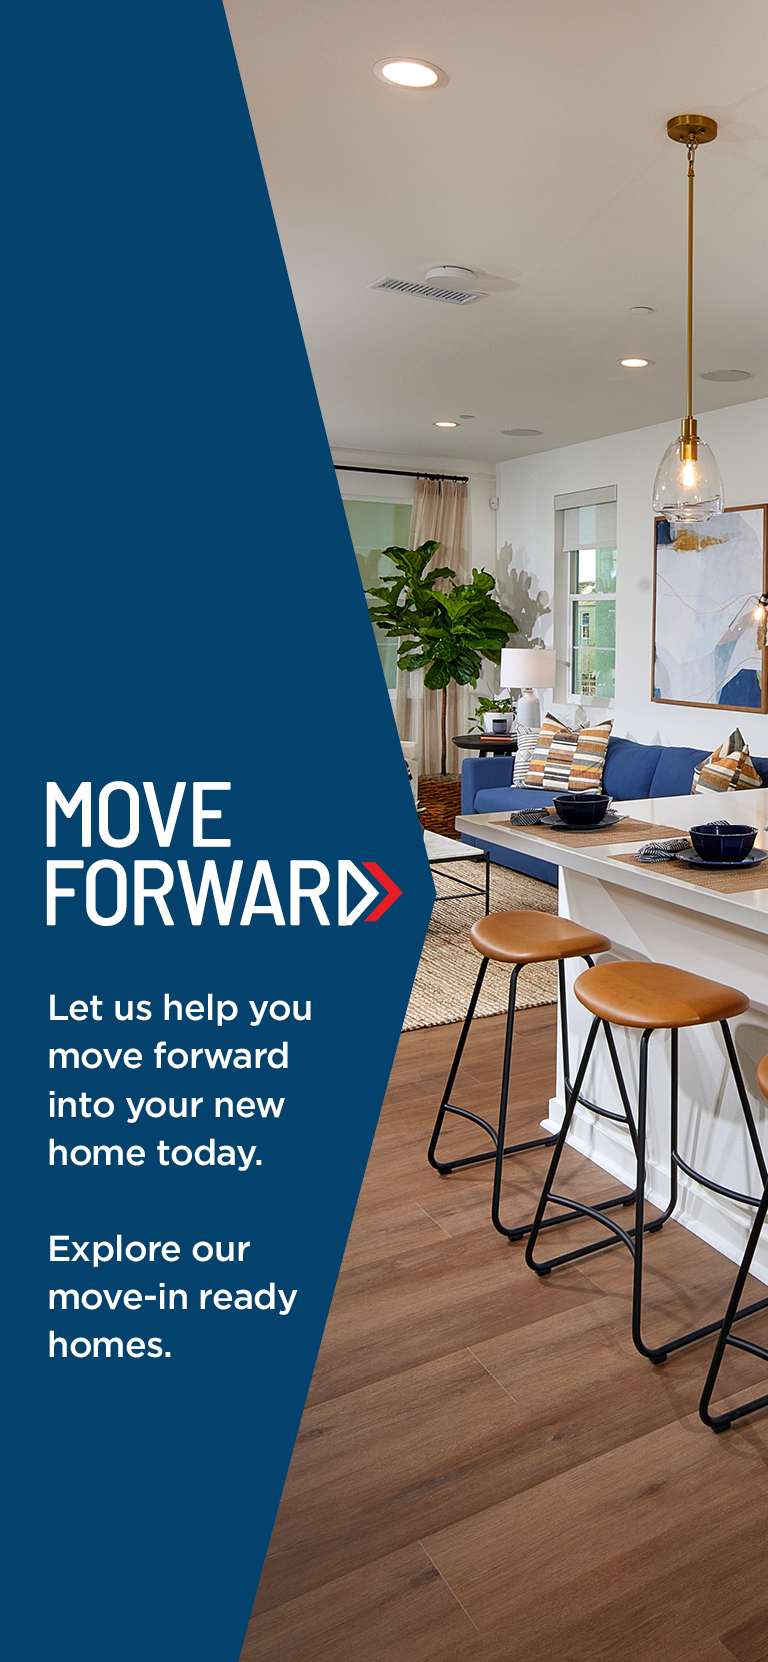 New Home Co - Move Forward 